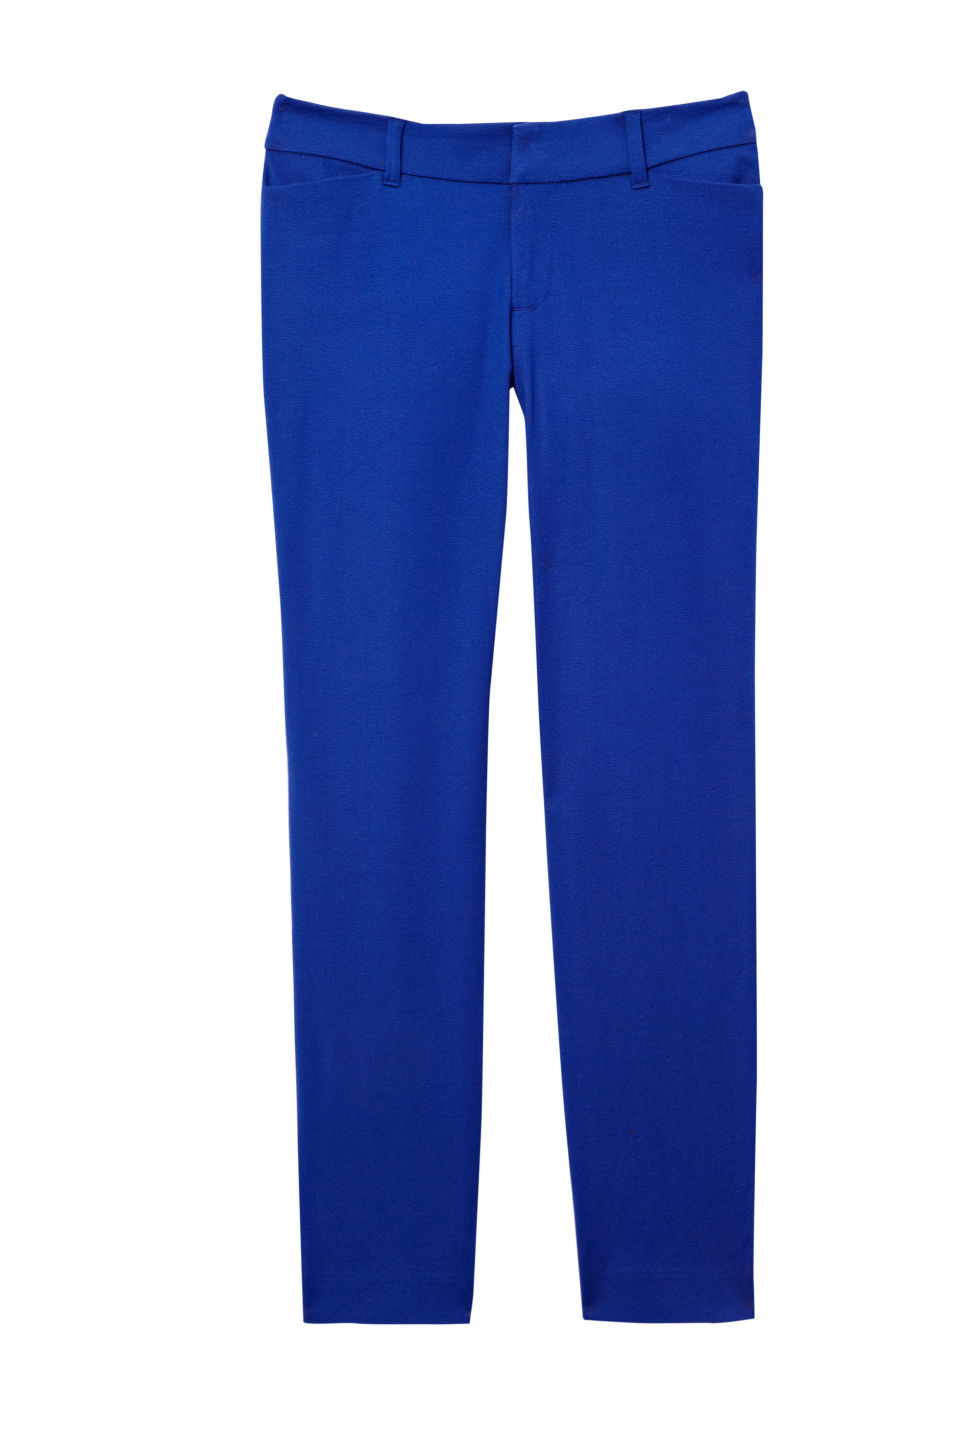 blue pants for women RFCOBZX